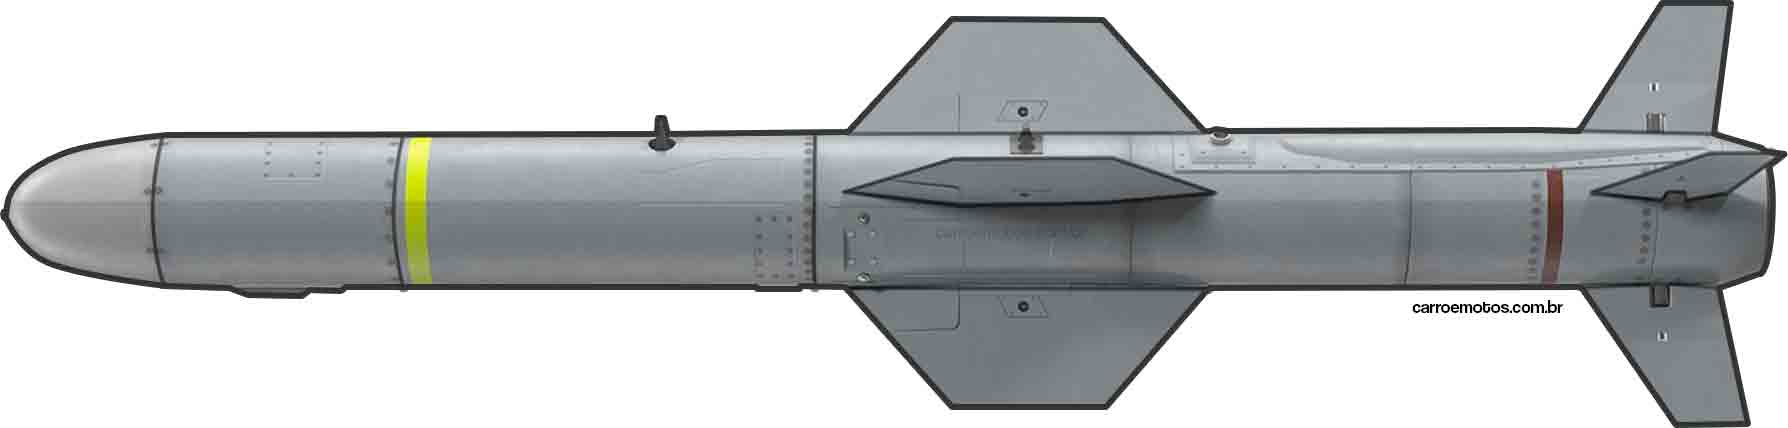 UGM-84L Harpoon Block II anti-schip raket. Foto: Carro e motos